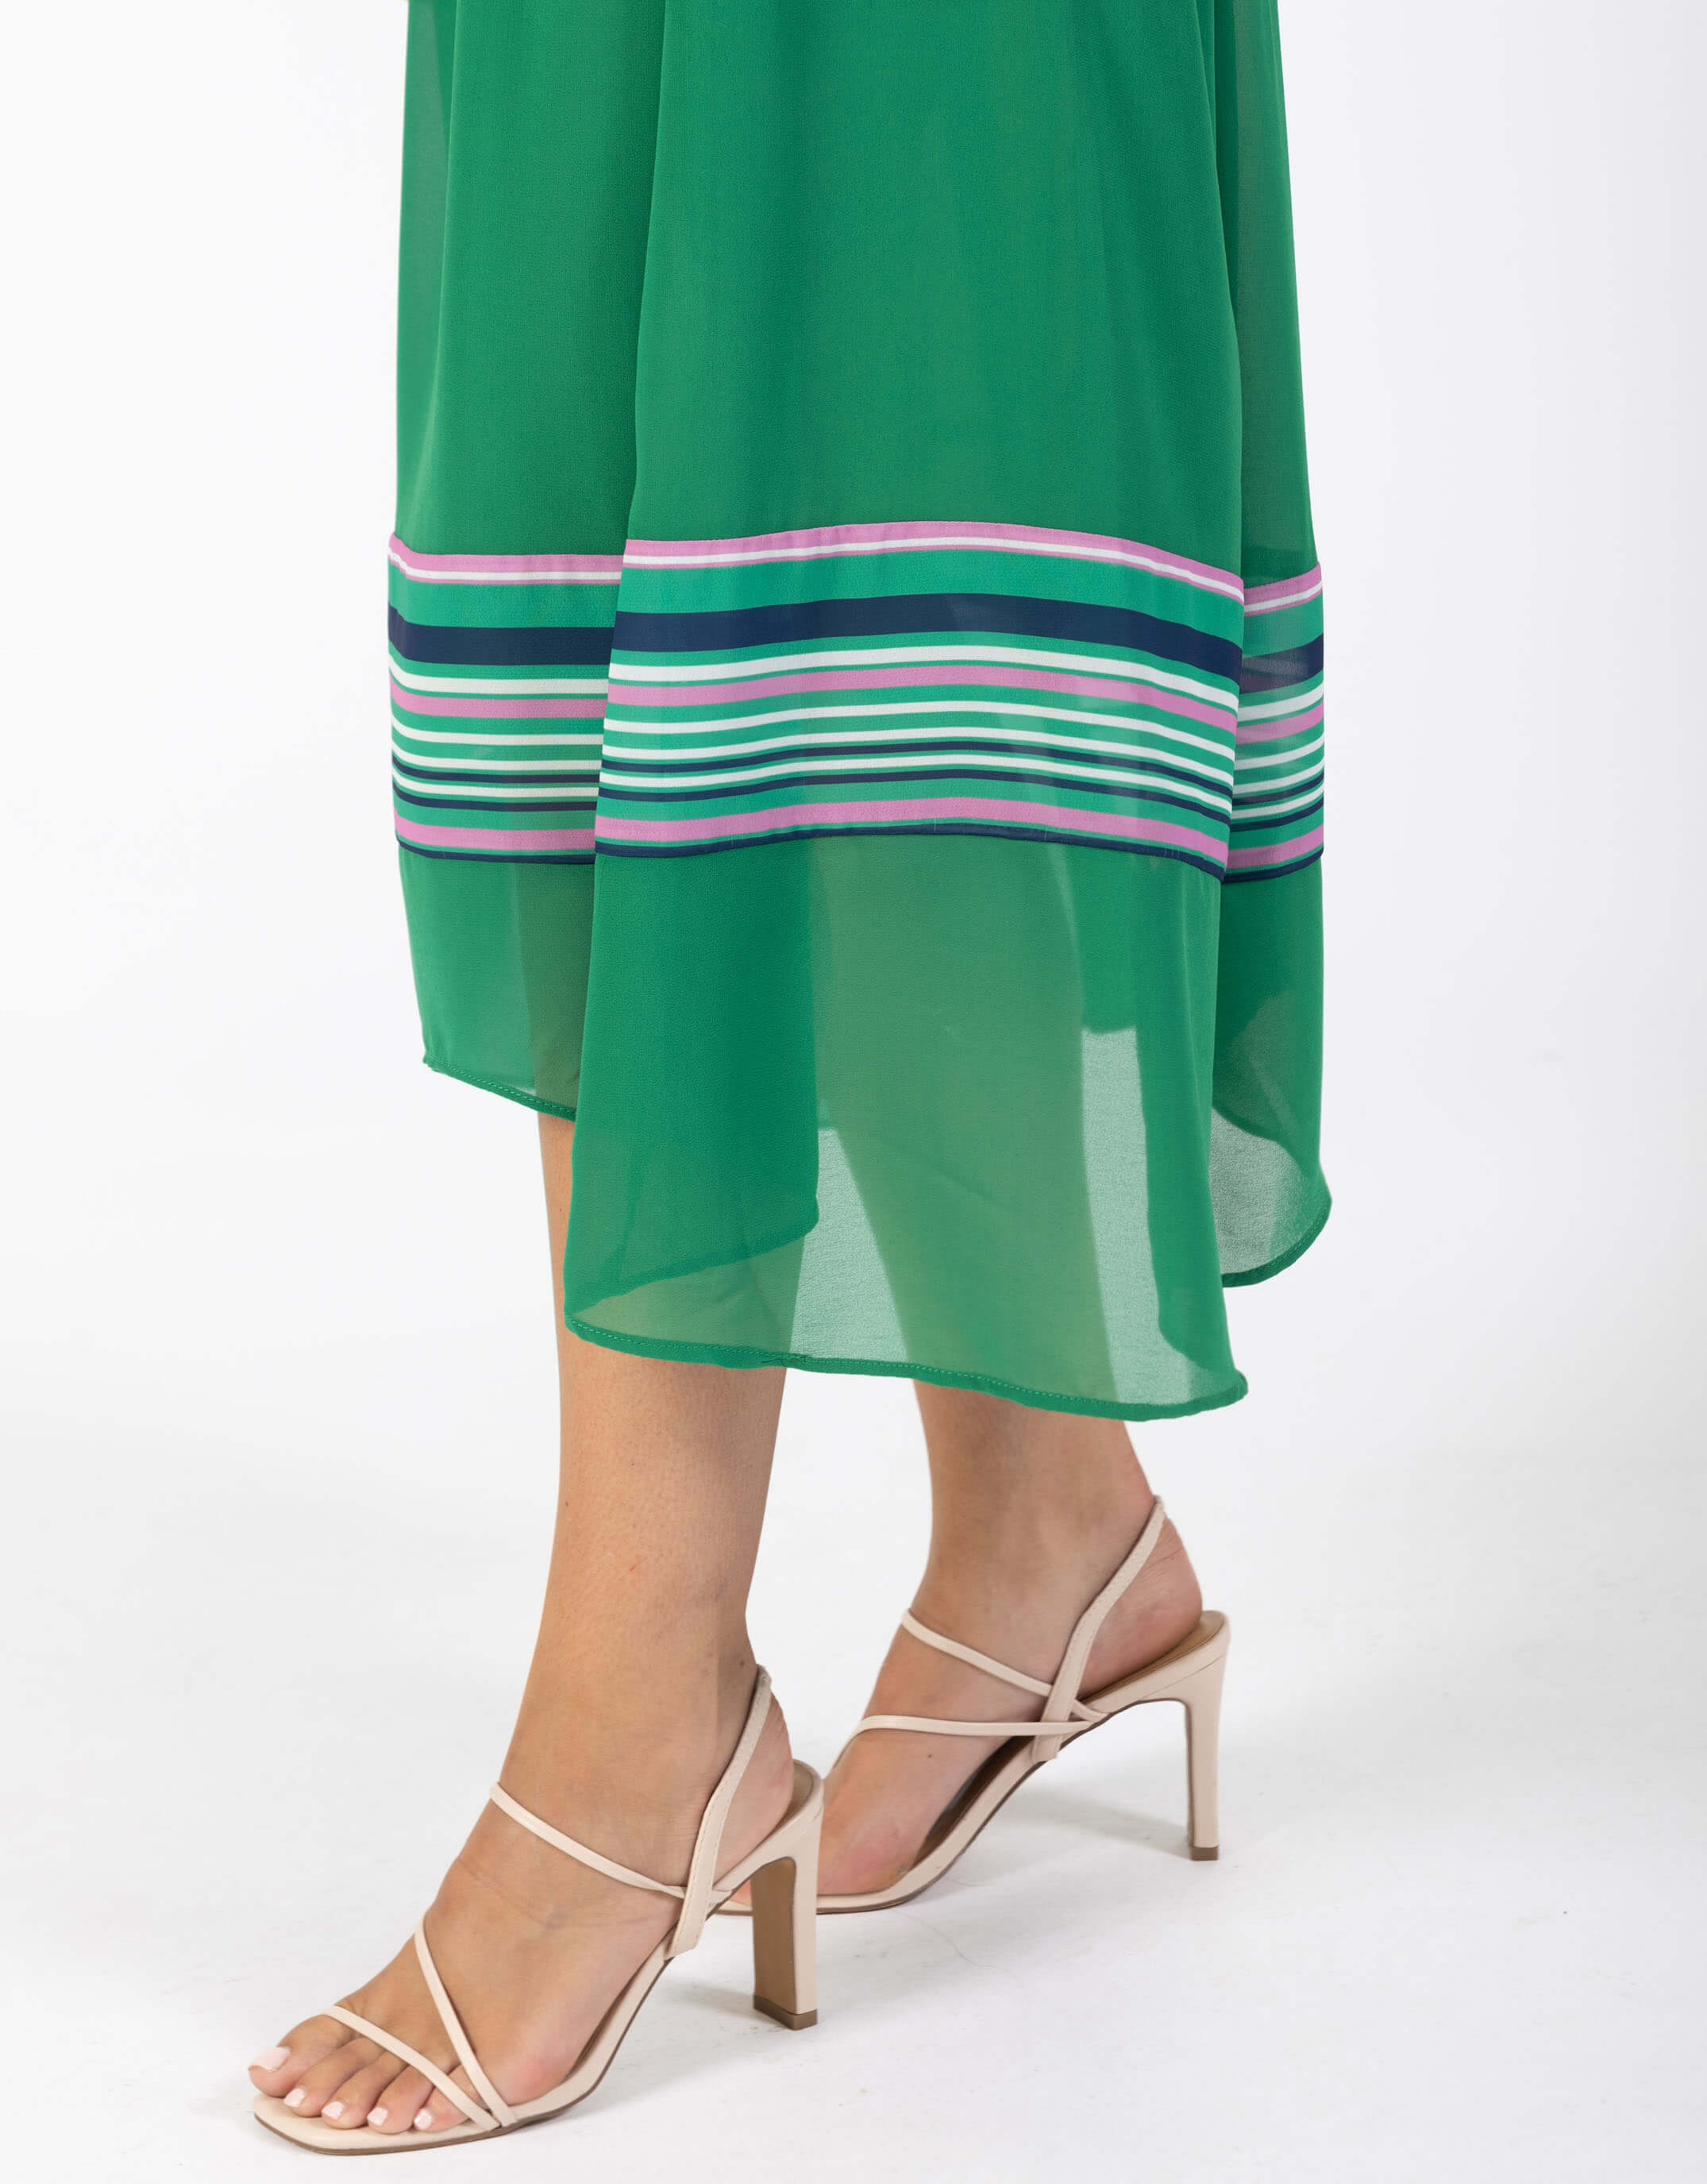 white-co-madison-avenue-midi-dress-emerald-womens-clothing